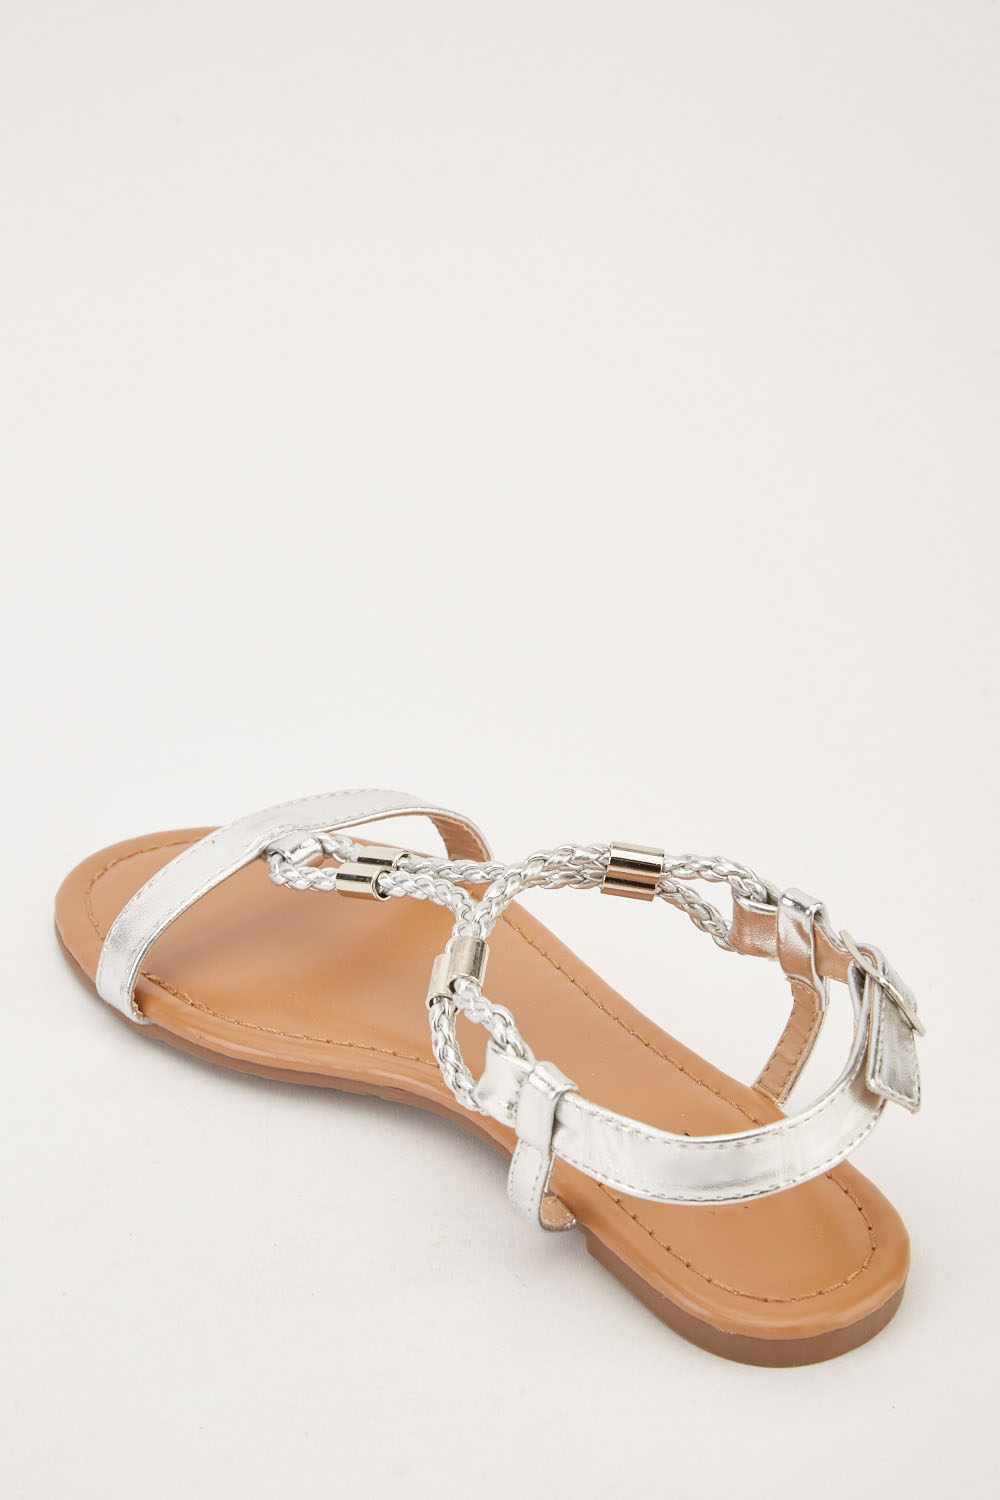 Metallic Plaited Flat Sandals - Just $7